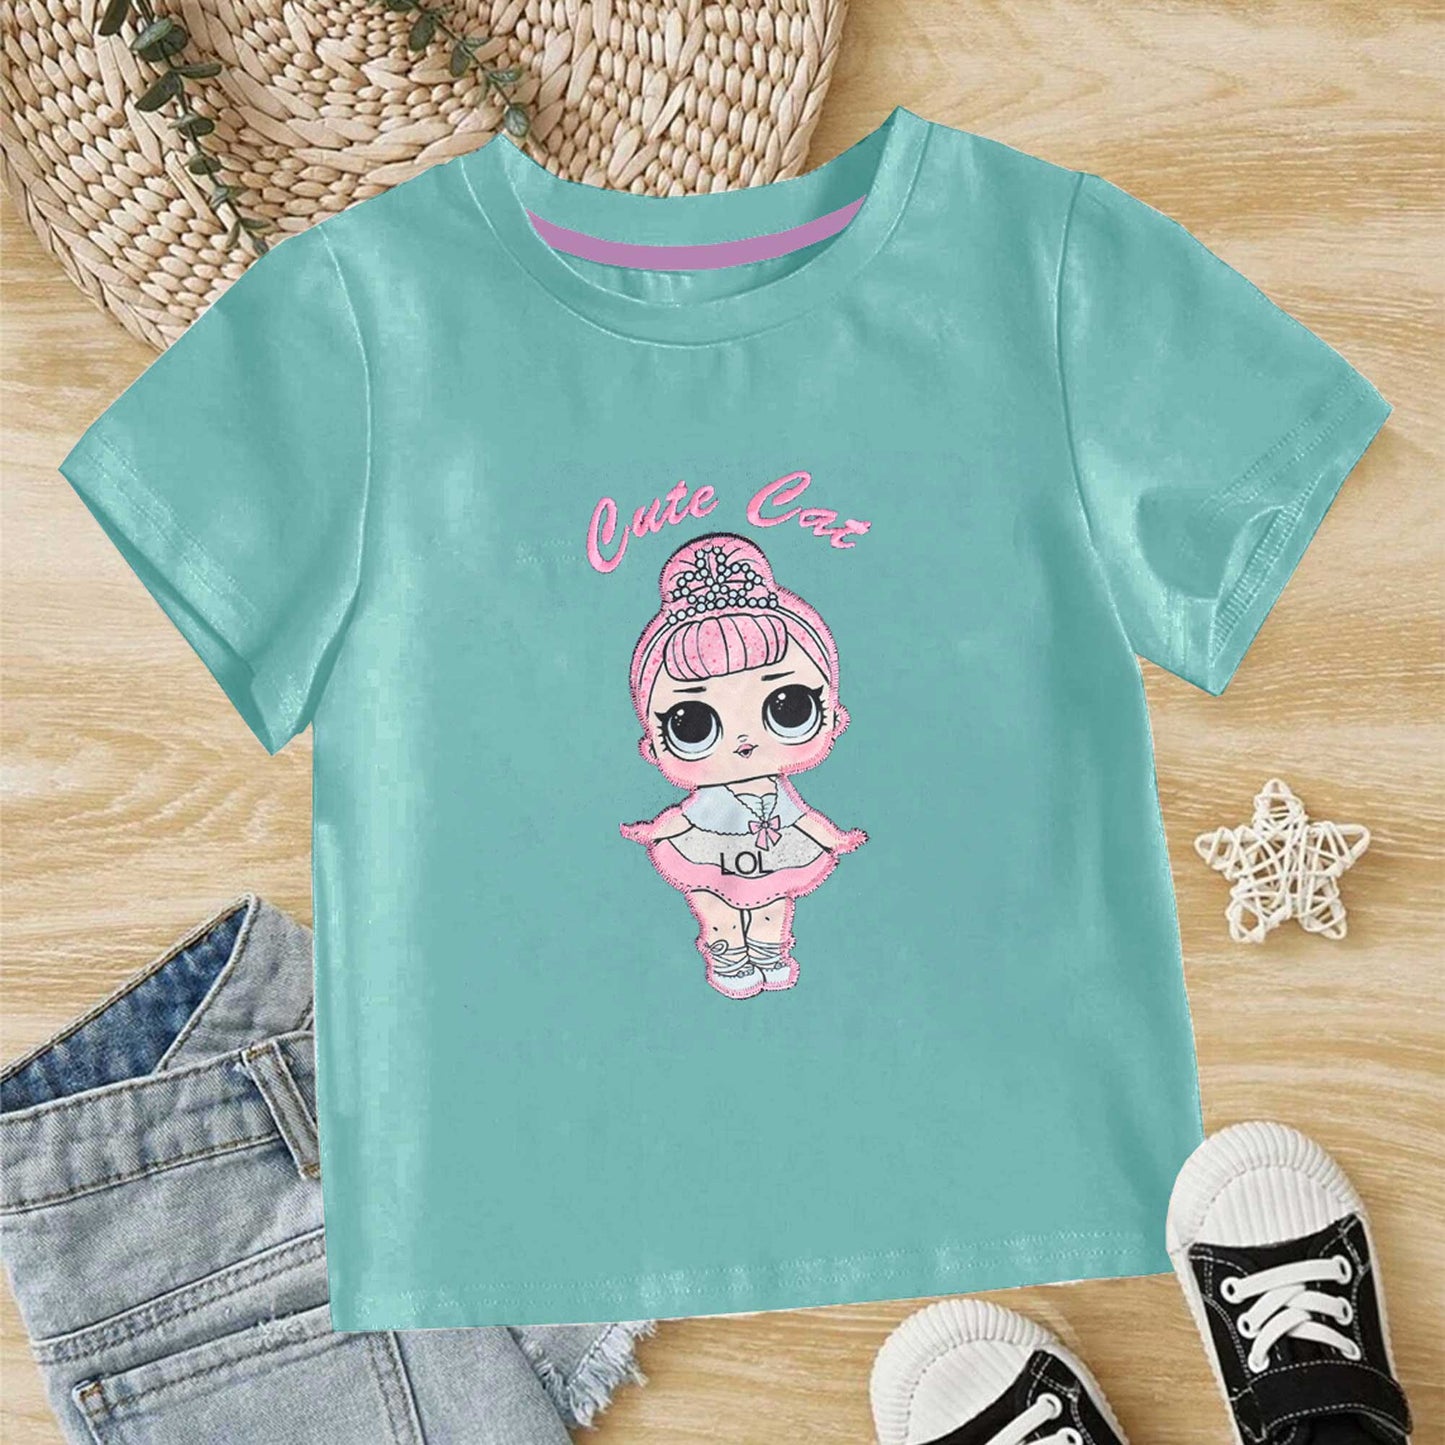 Junior Kid's Cute Cat Printed Tee Shirt Girl's Tee Shirt SZK Turquoise 3-6 Months 